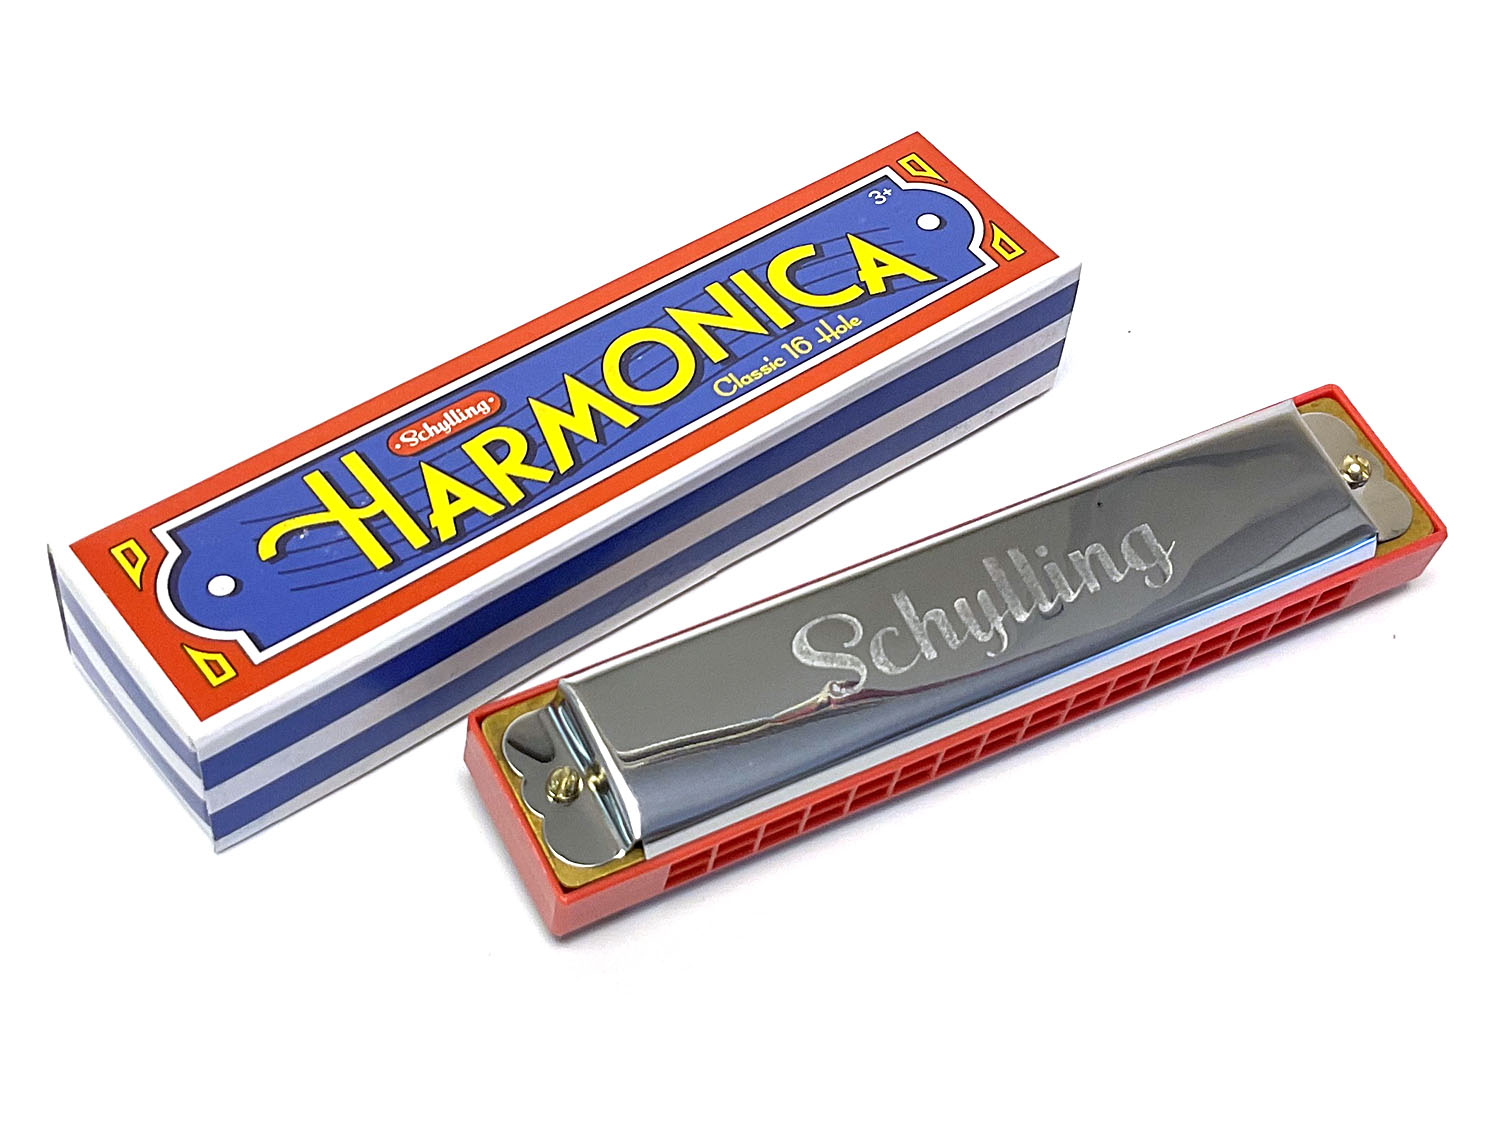 Harmonica - 5 inch